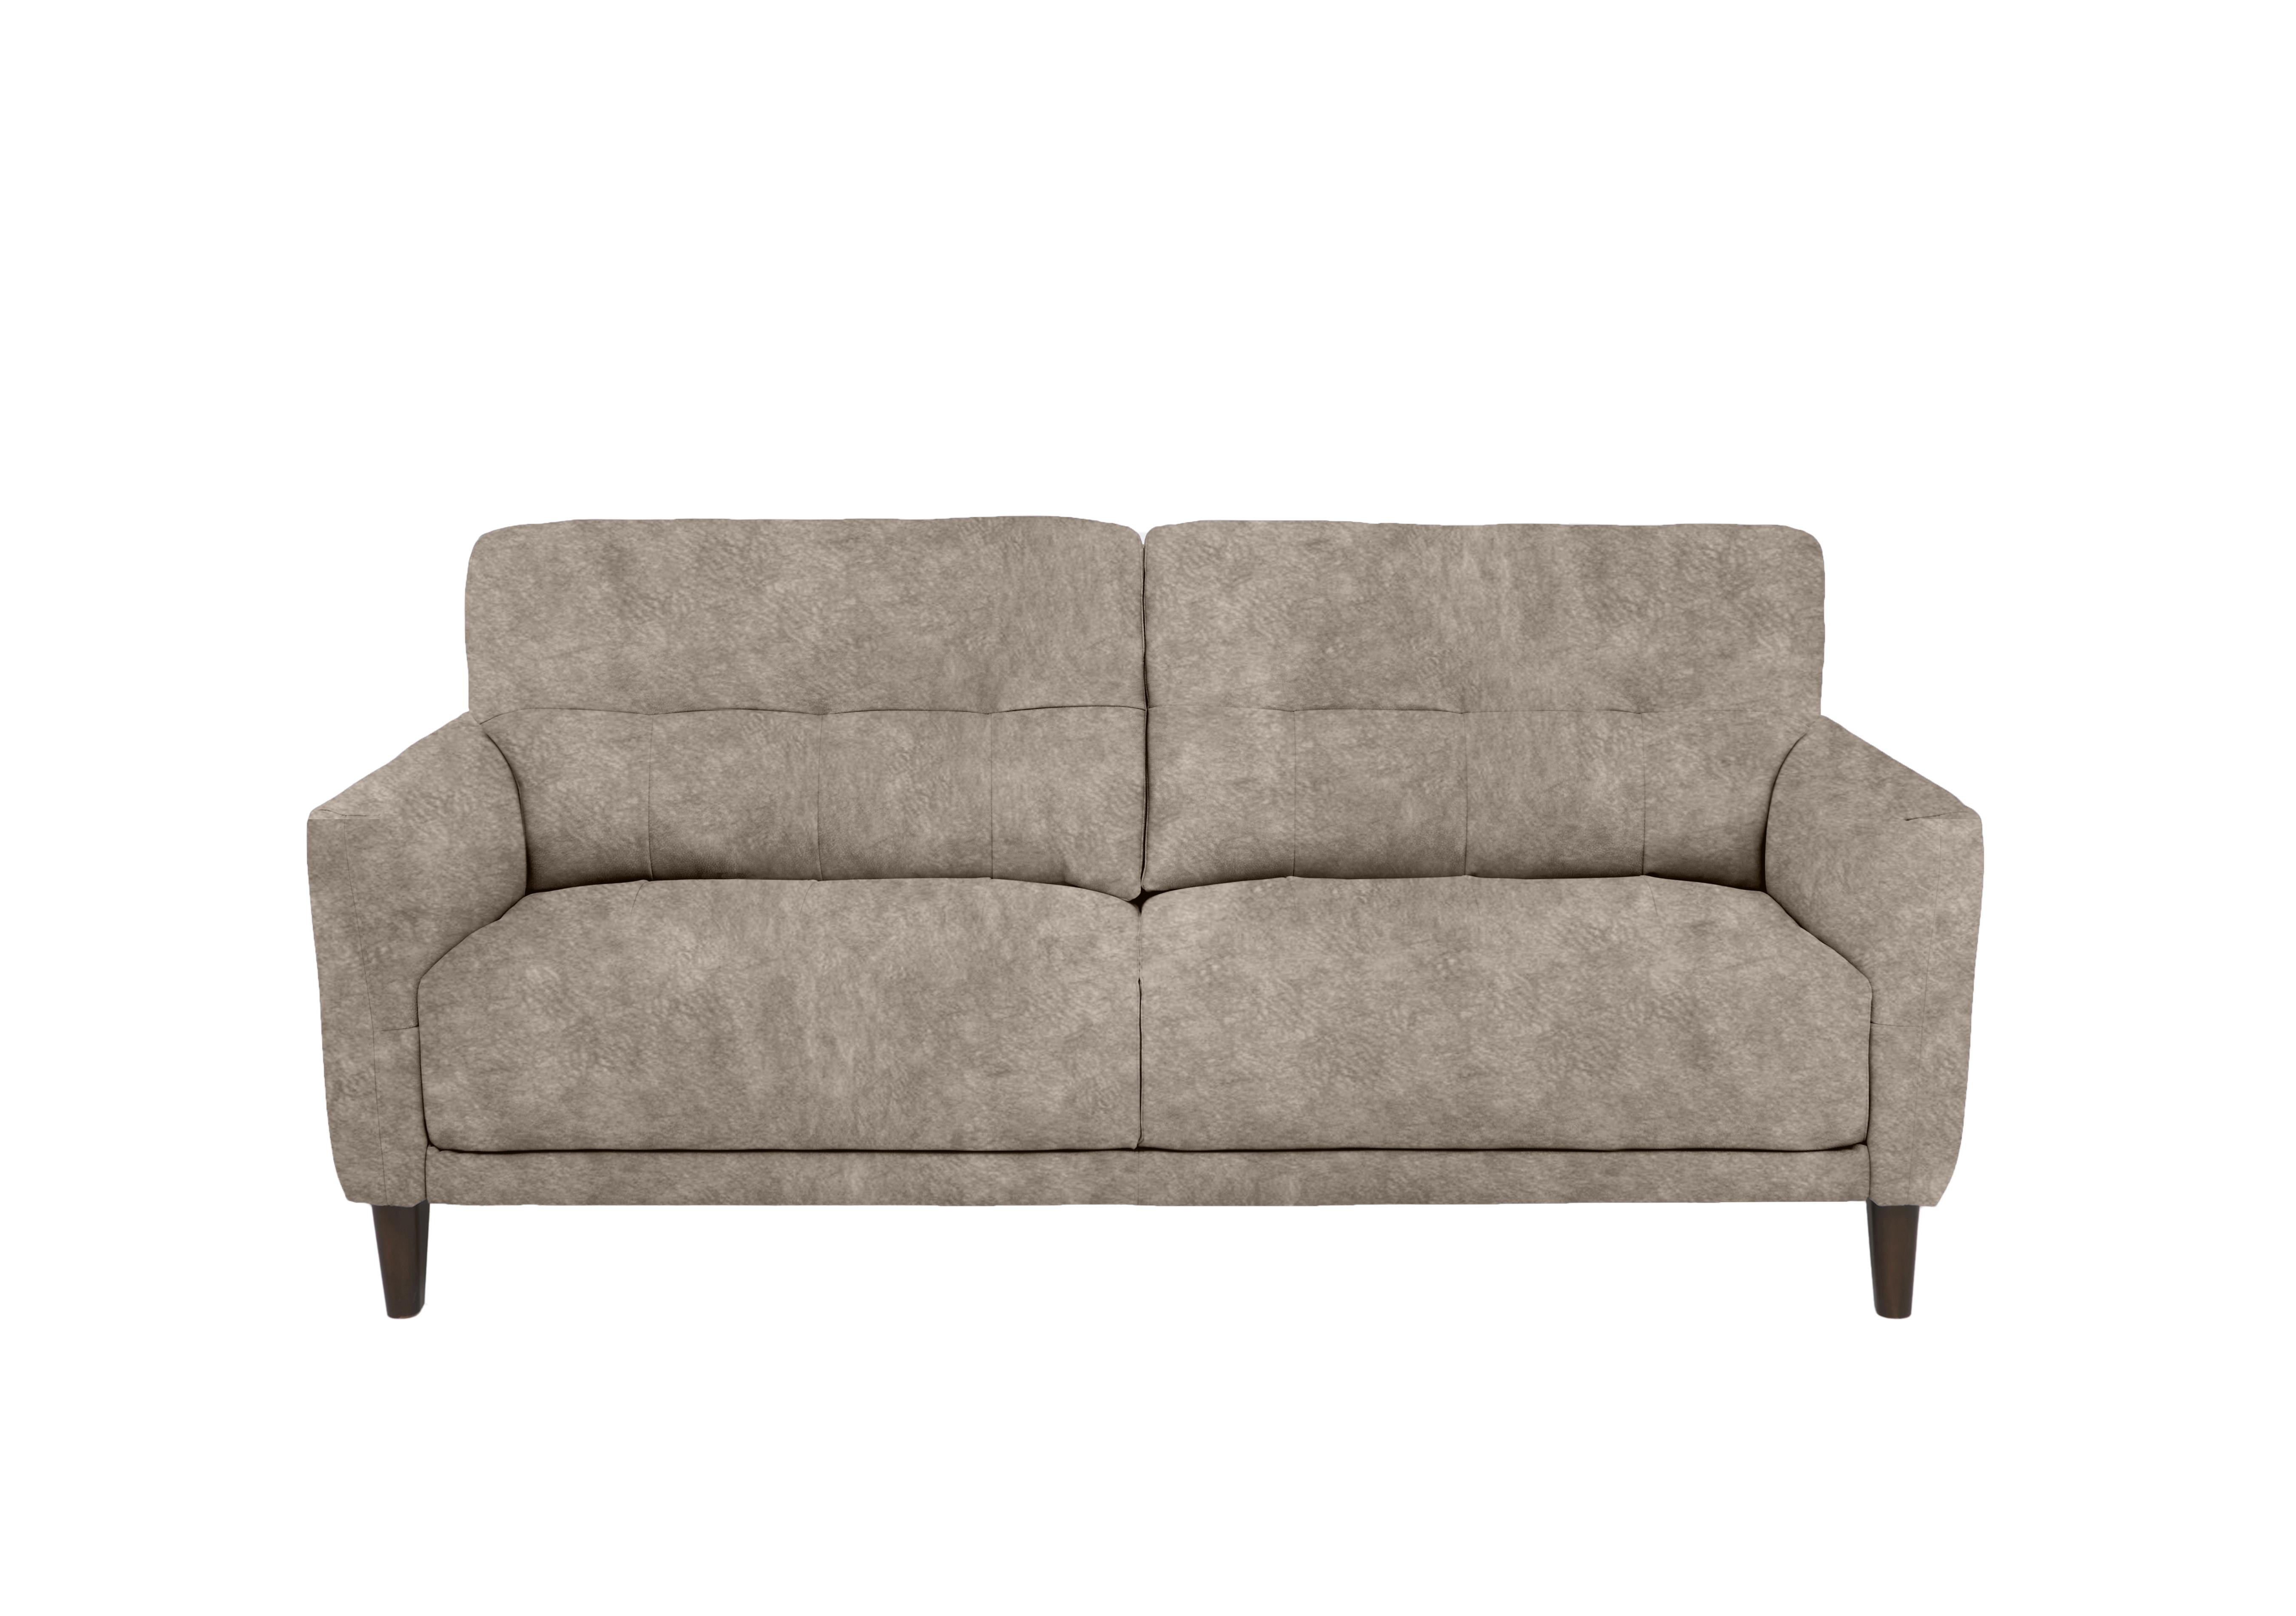 Uno Fabric 3 Seater Sofa in Bfa-Bnn-R29 Mink on Furniture Village